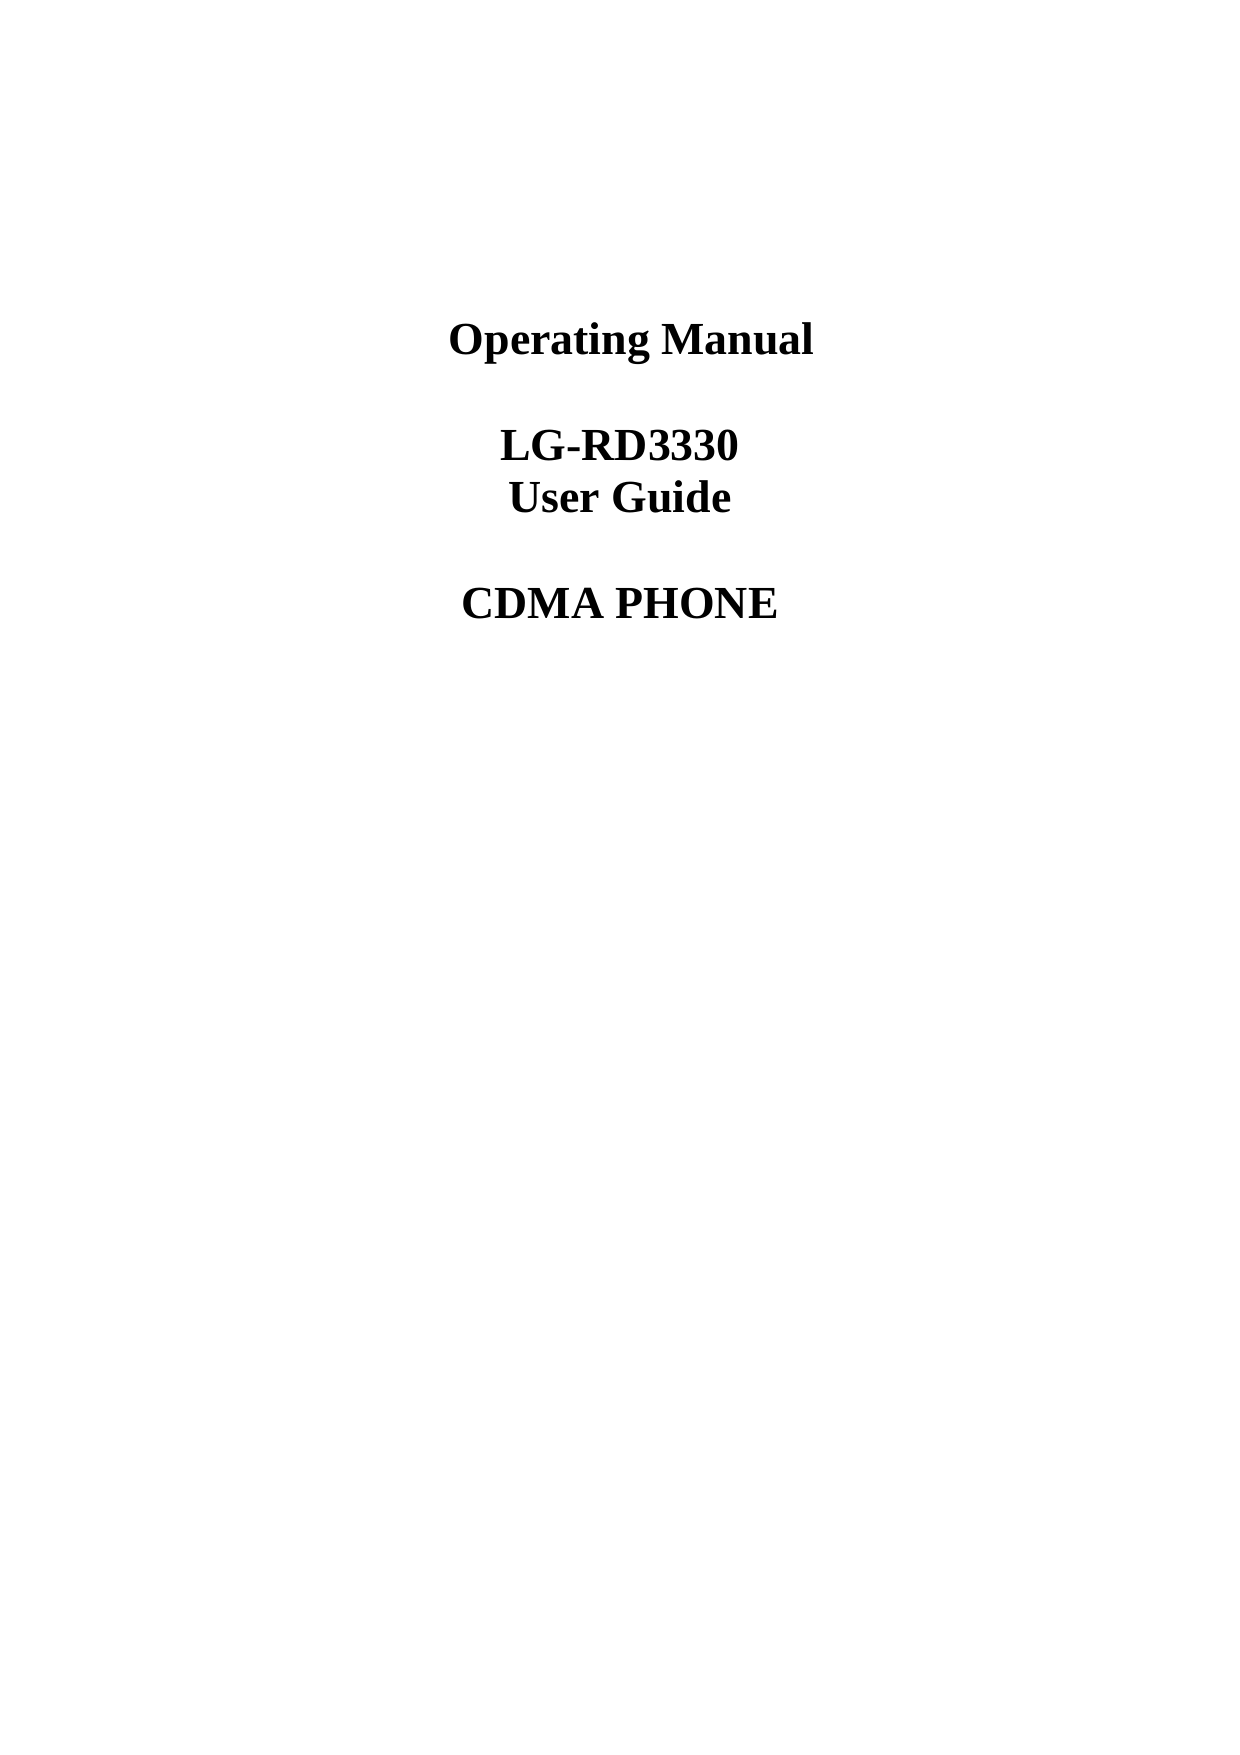    Operating Manual  LG-RD3330 User Guide  CDMA PHONE                          